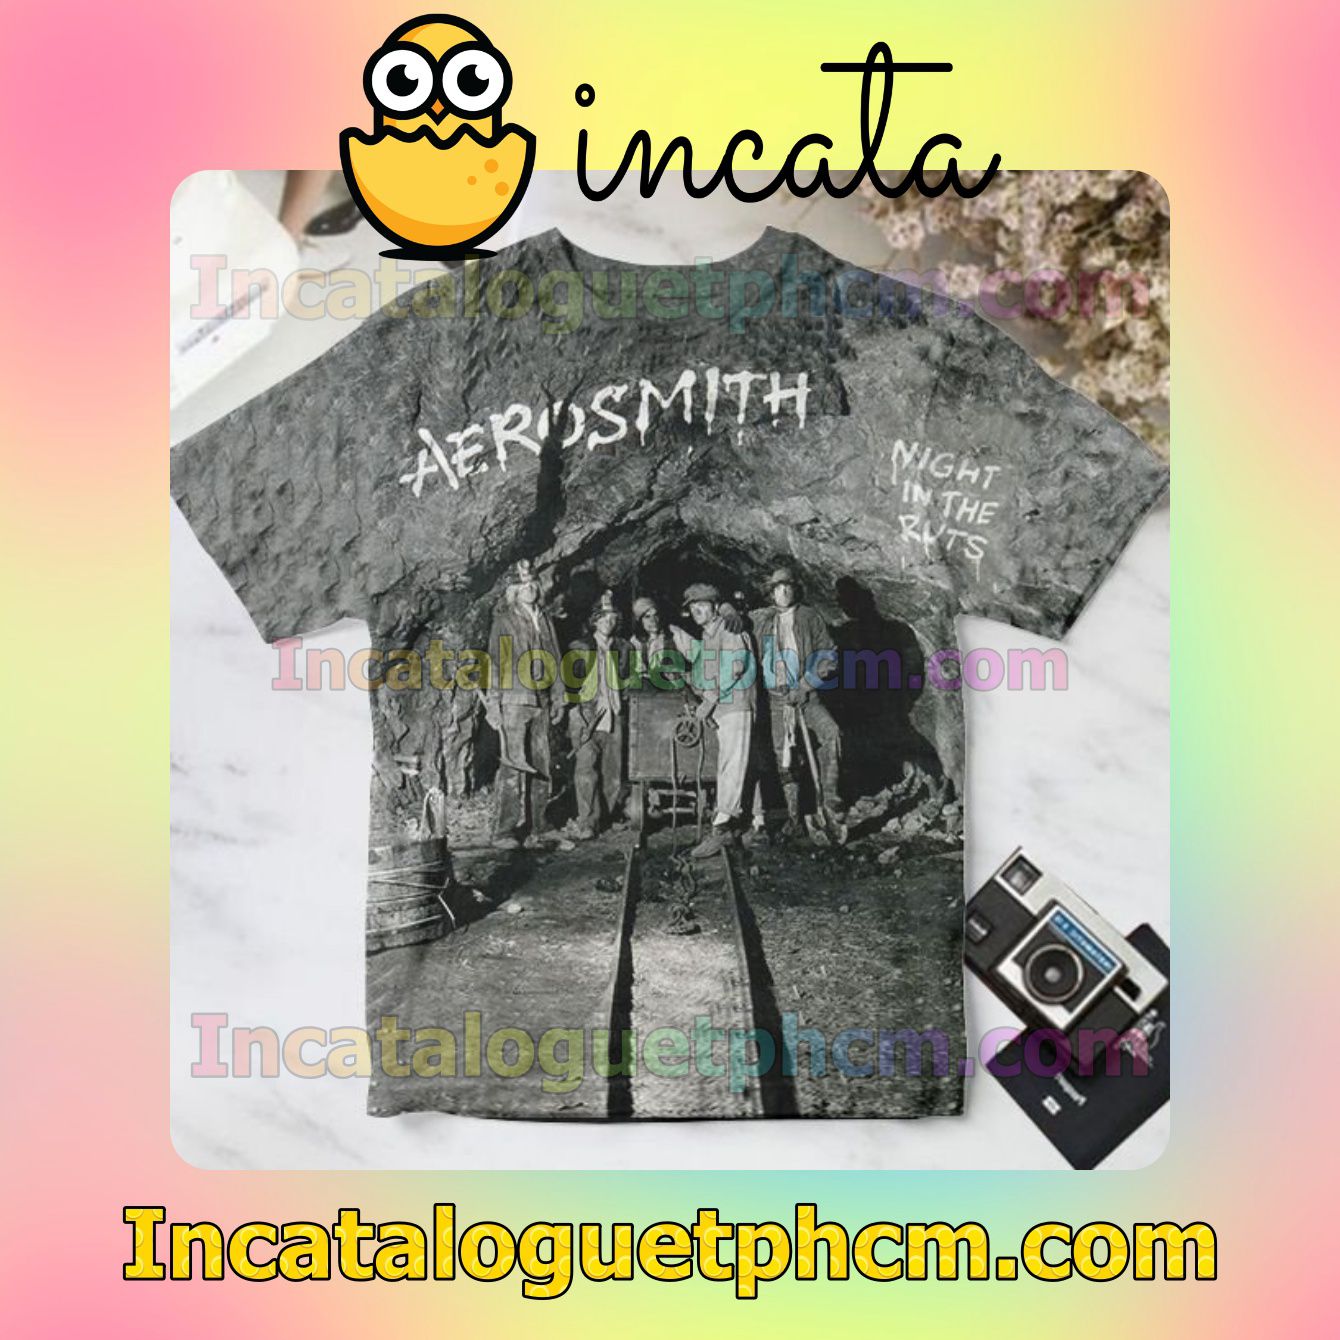 Aerosmith Night In The Ruts Album Cover Personalized Shirt